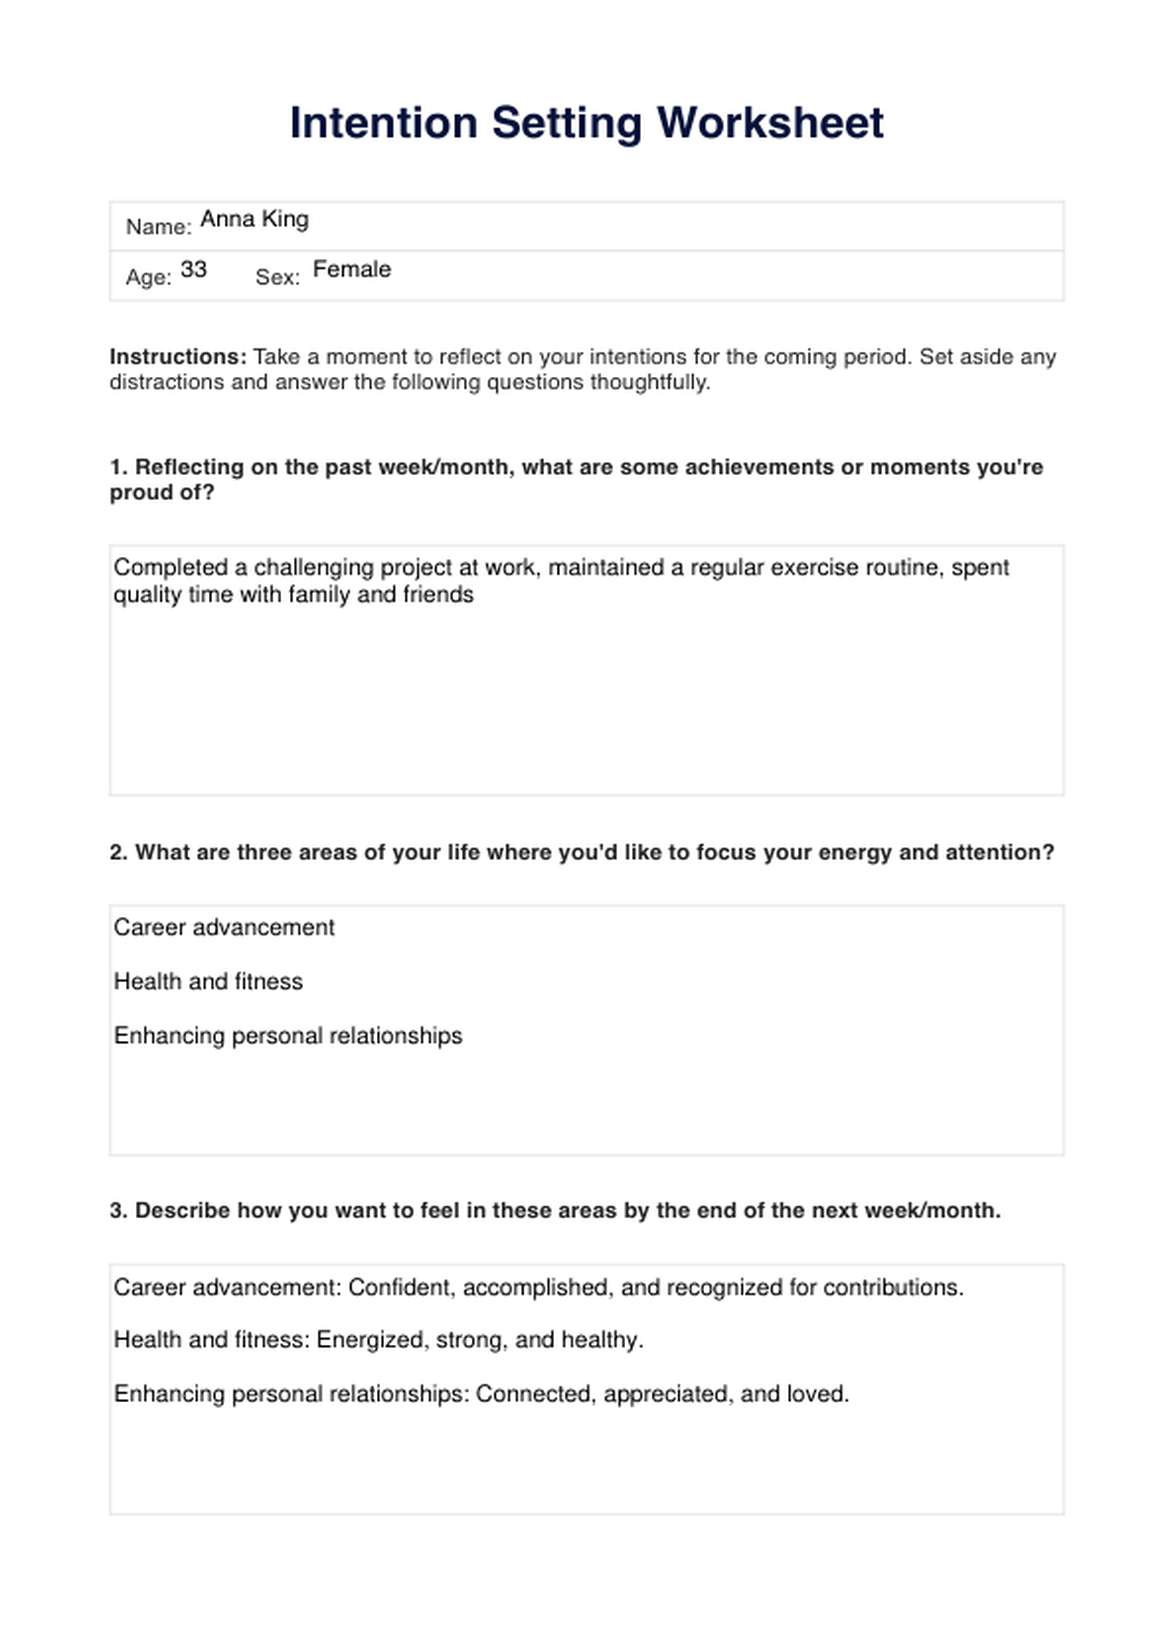 Intention Setting Worksheet PDF Example